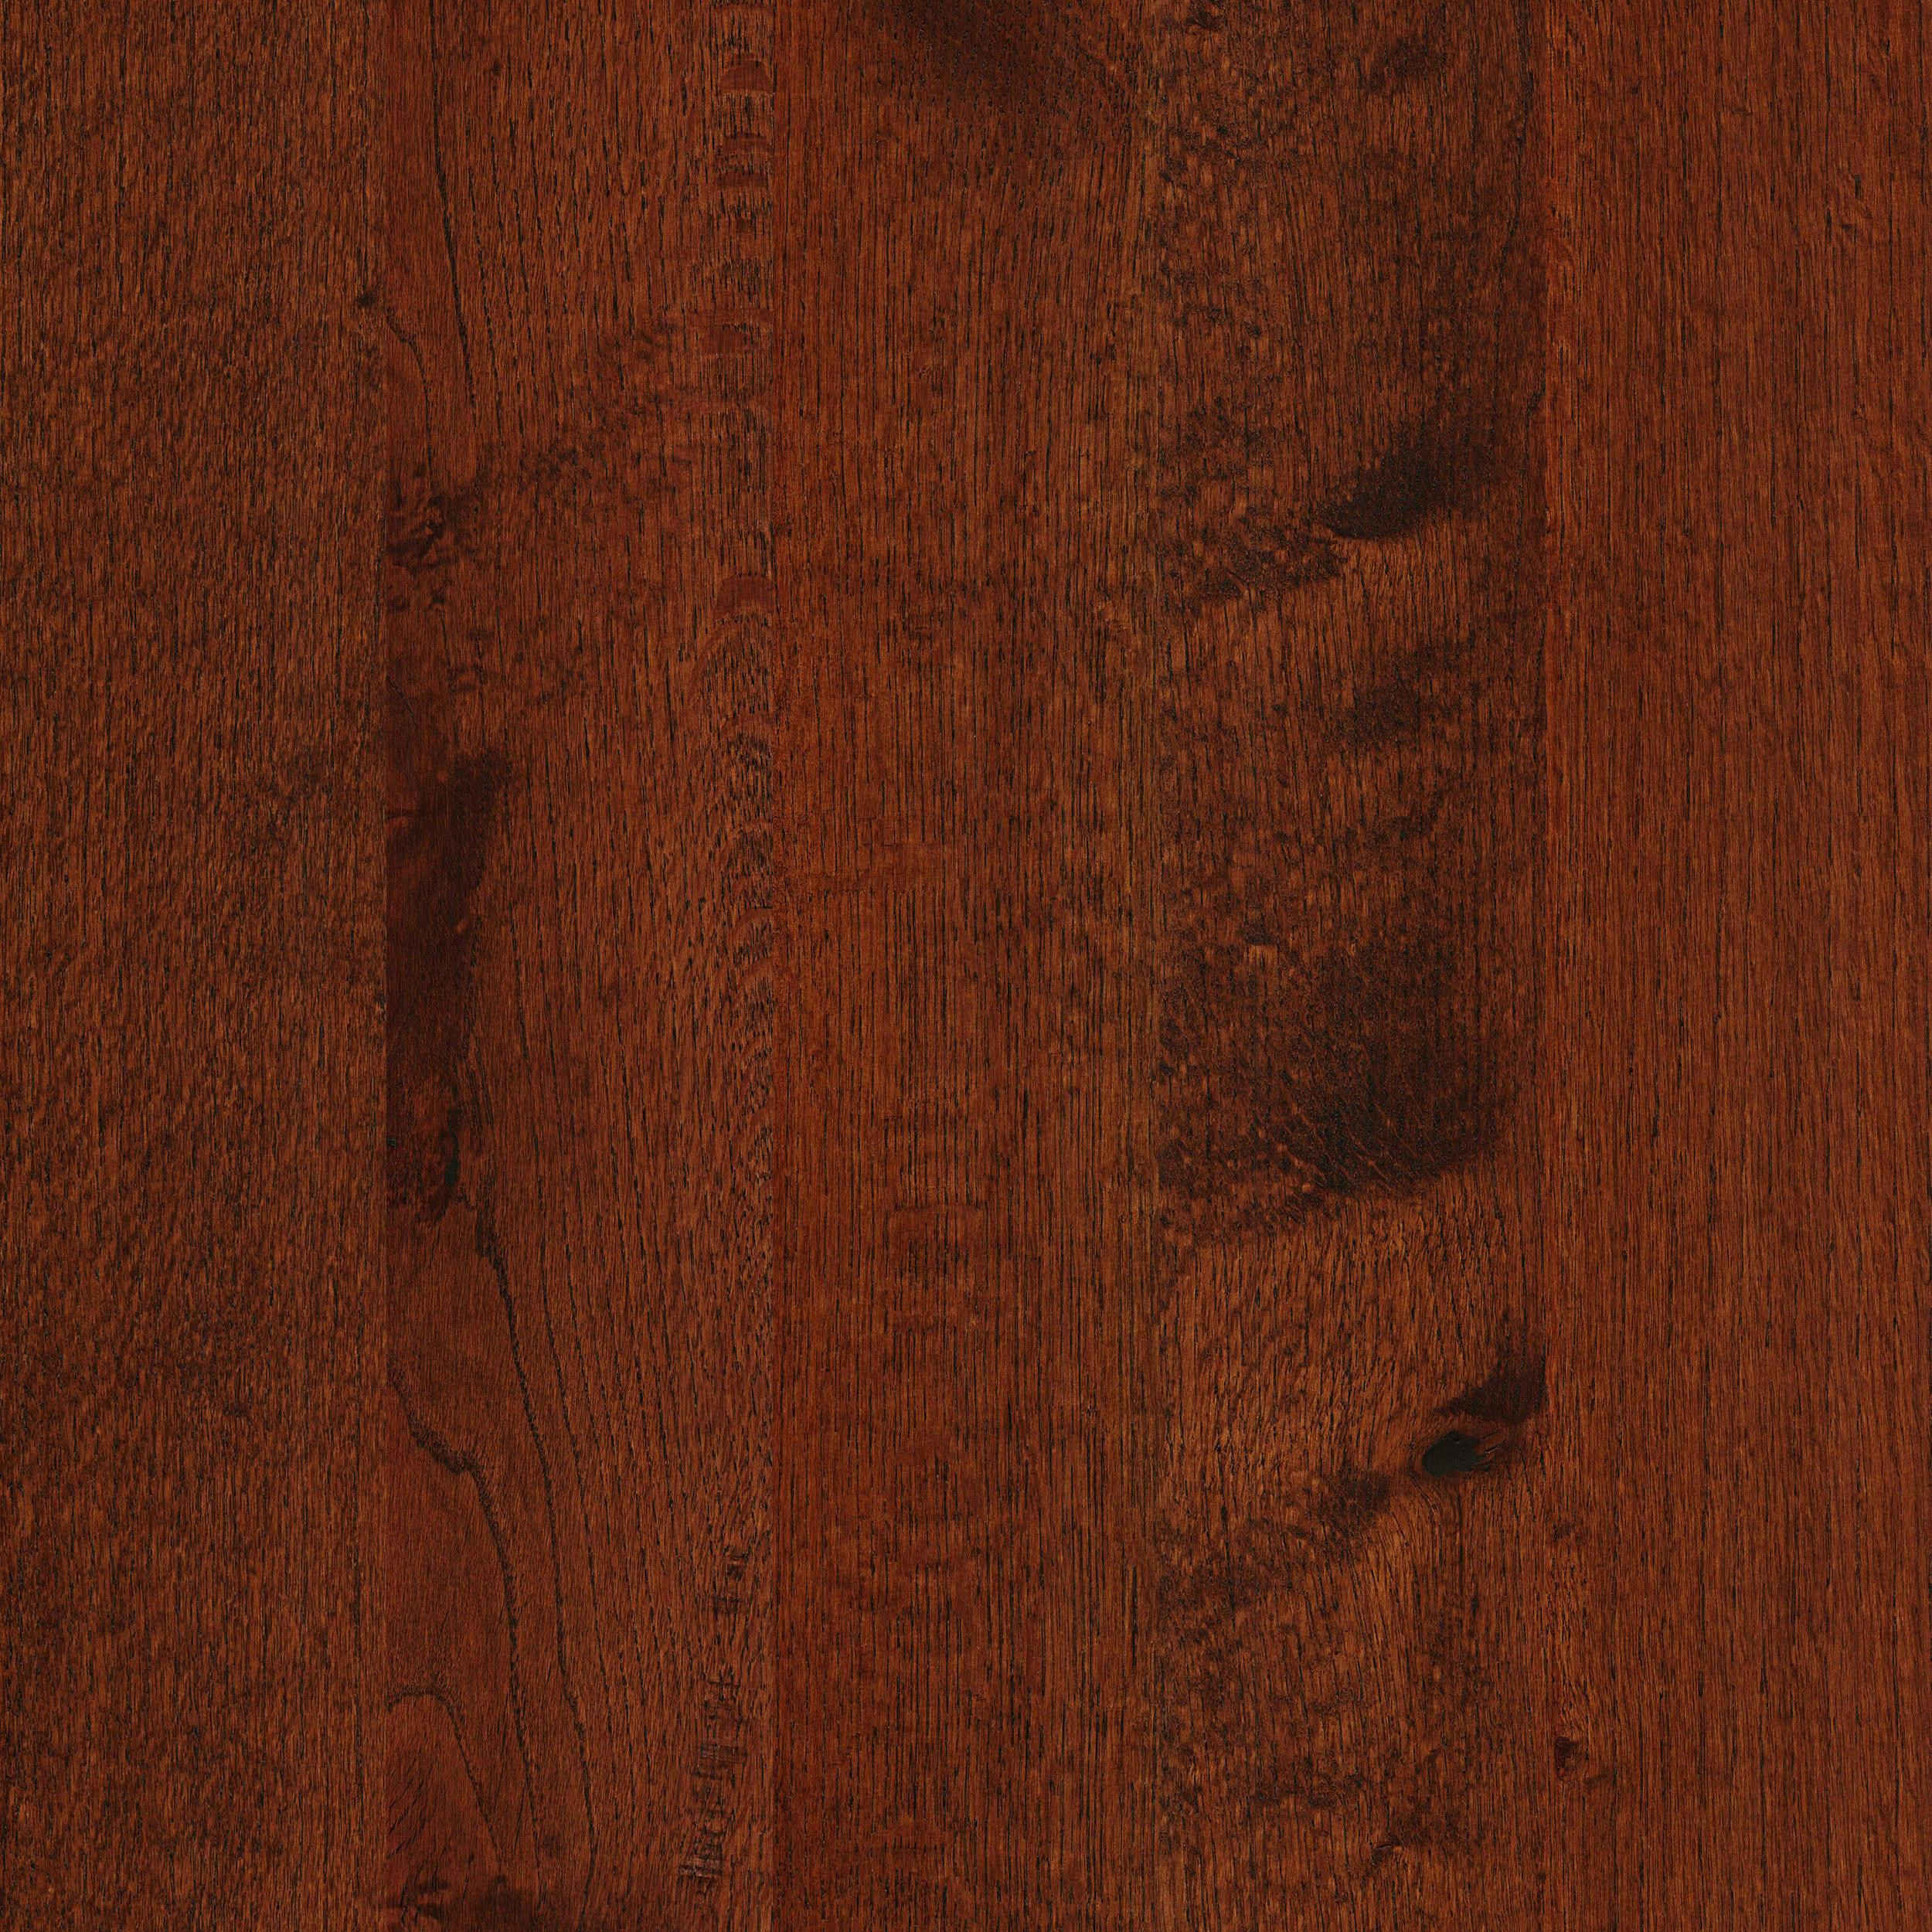 15 Unique 3 4 Inch Hardwood Flooring 2024 free download 3 4 inch hardwood flooring of timber hardwood red oak sorrell 5 wide solid hardwood flooring pertaining to red oak sorrell timber solid approved bk